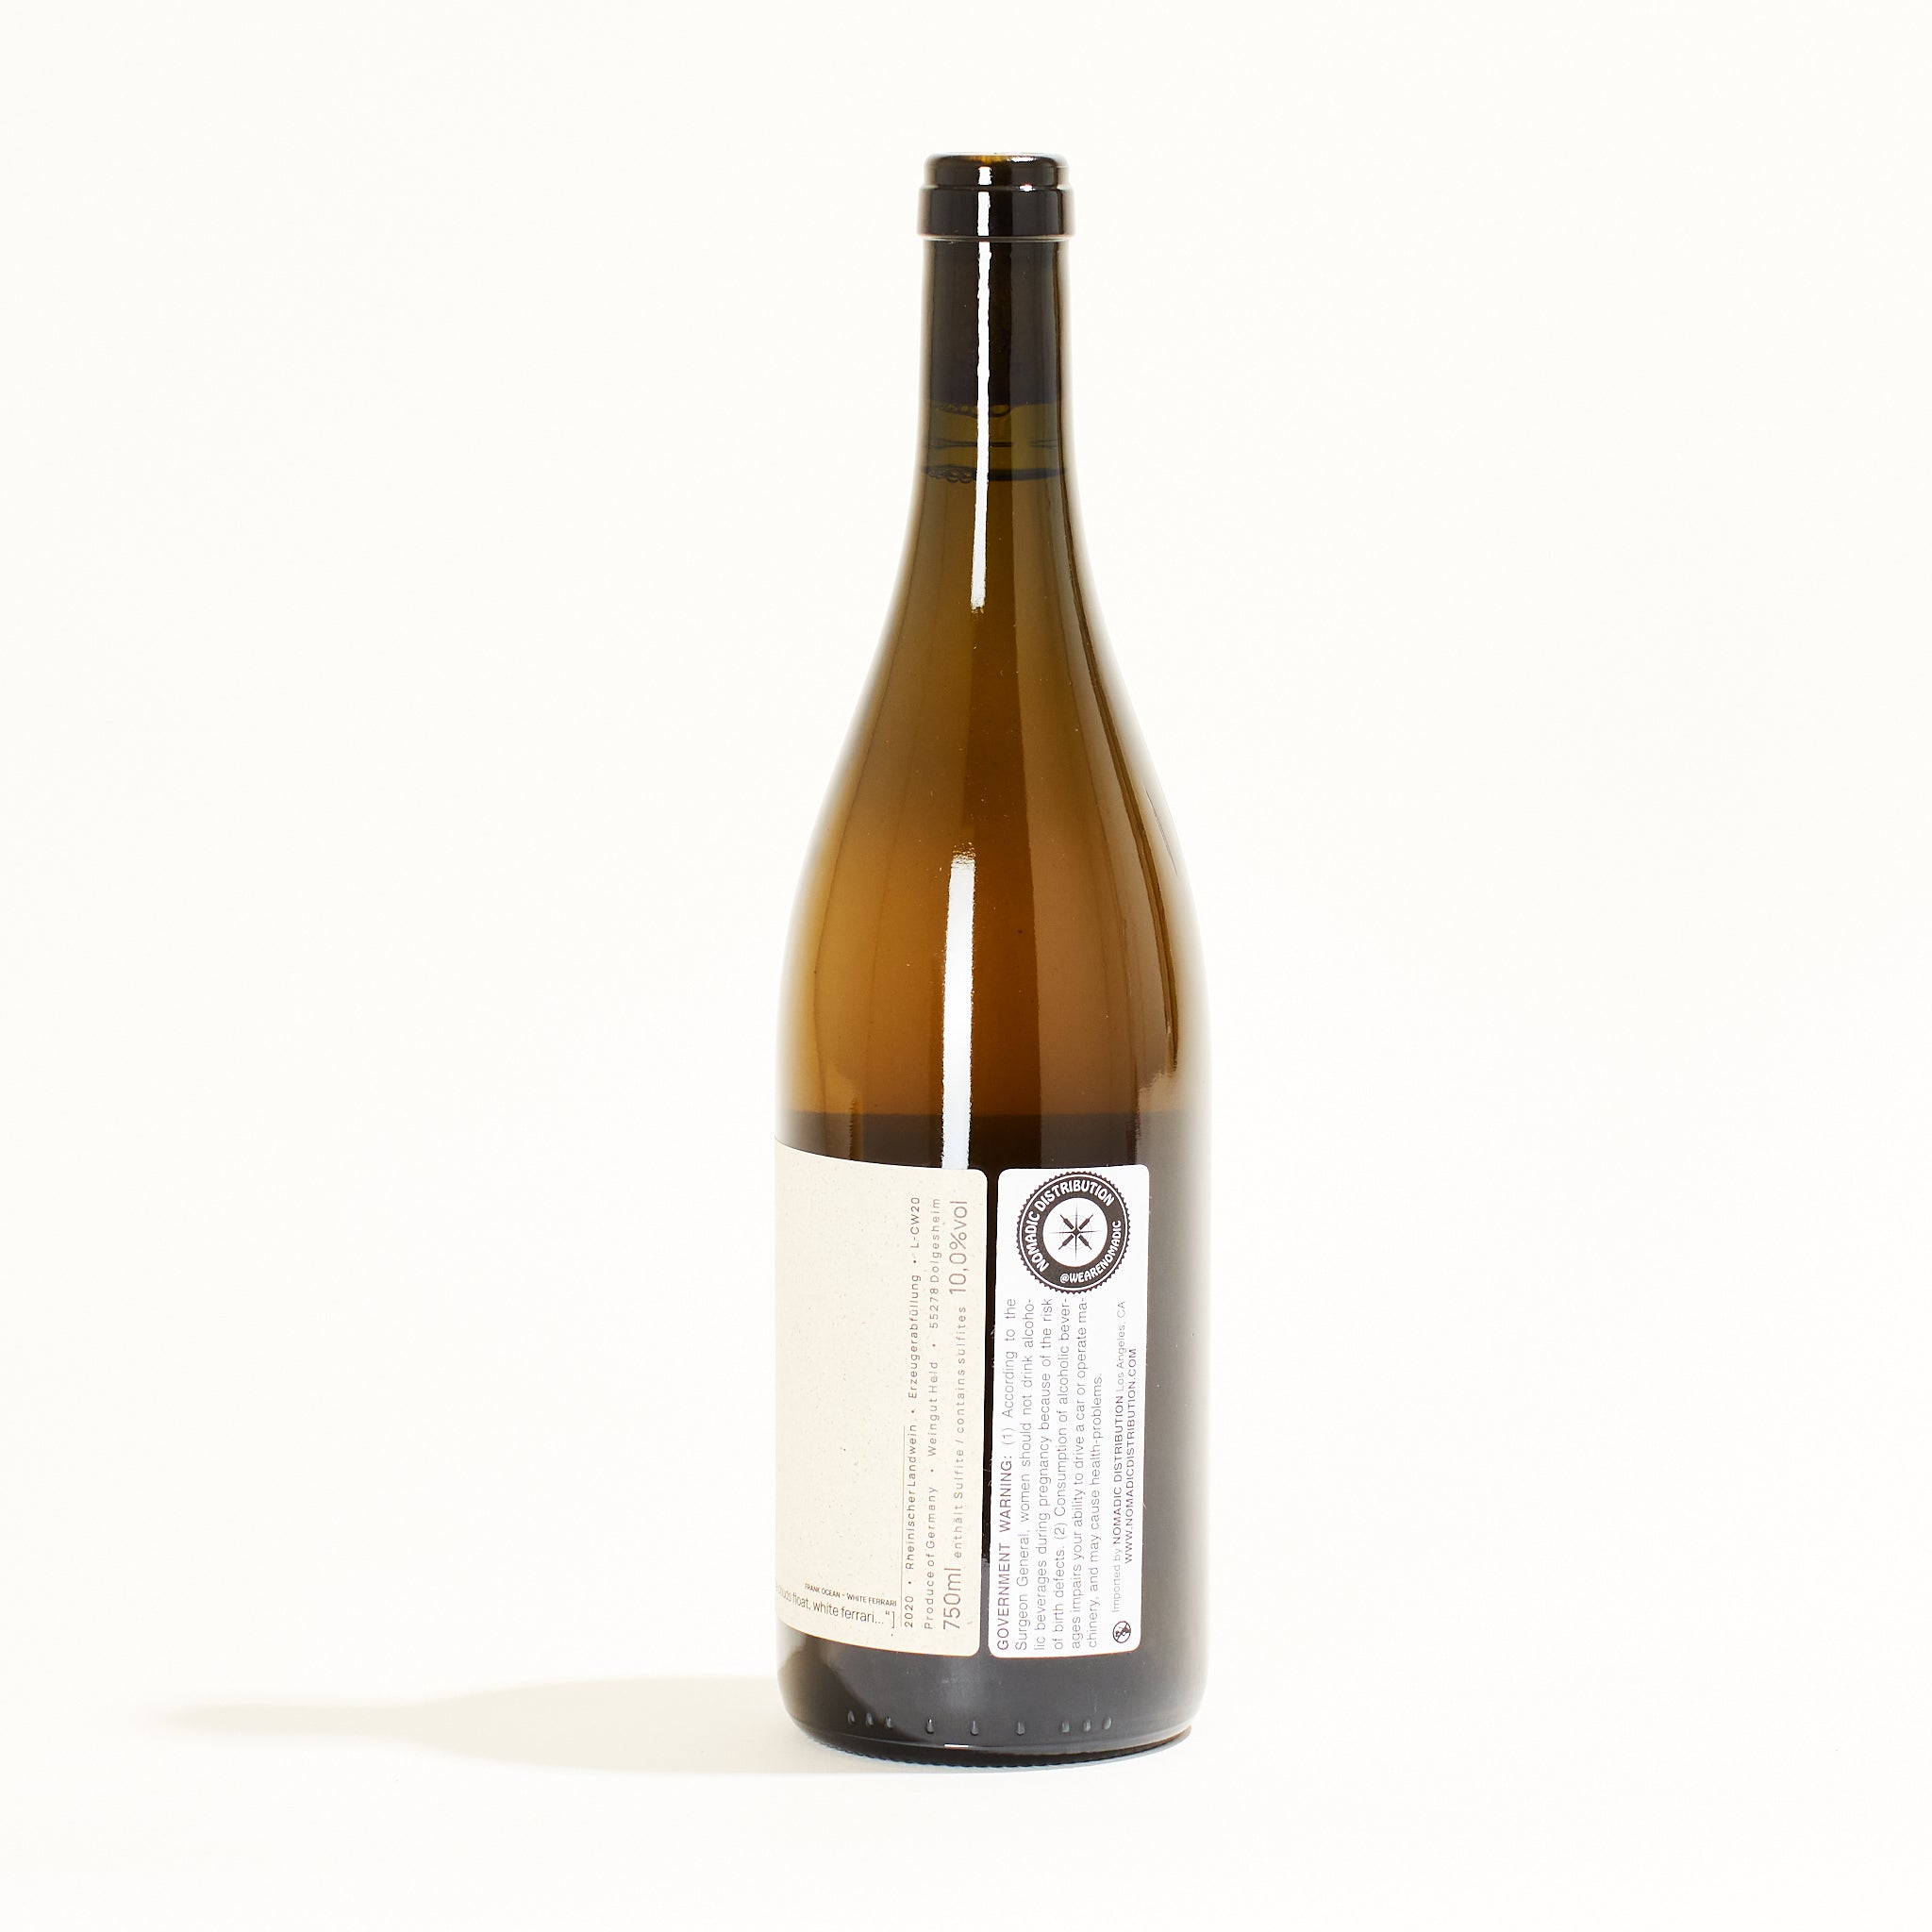 Dominik Held Cuvée Weiss White Blend natural white wine Rheinhessen Germany back label